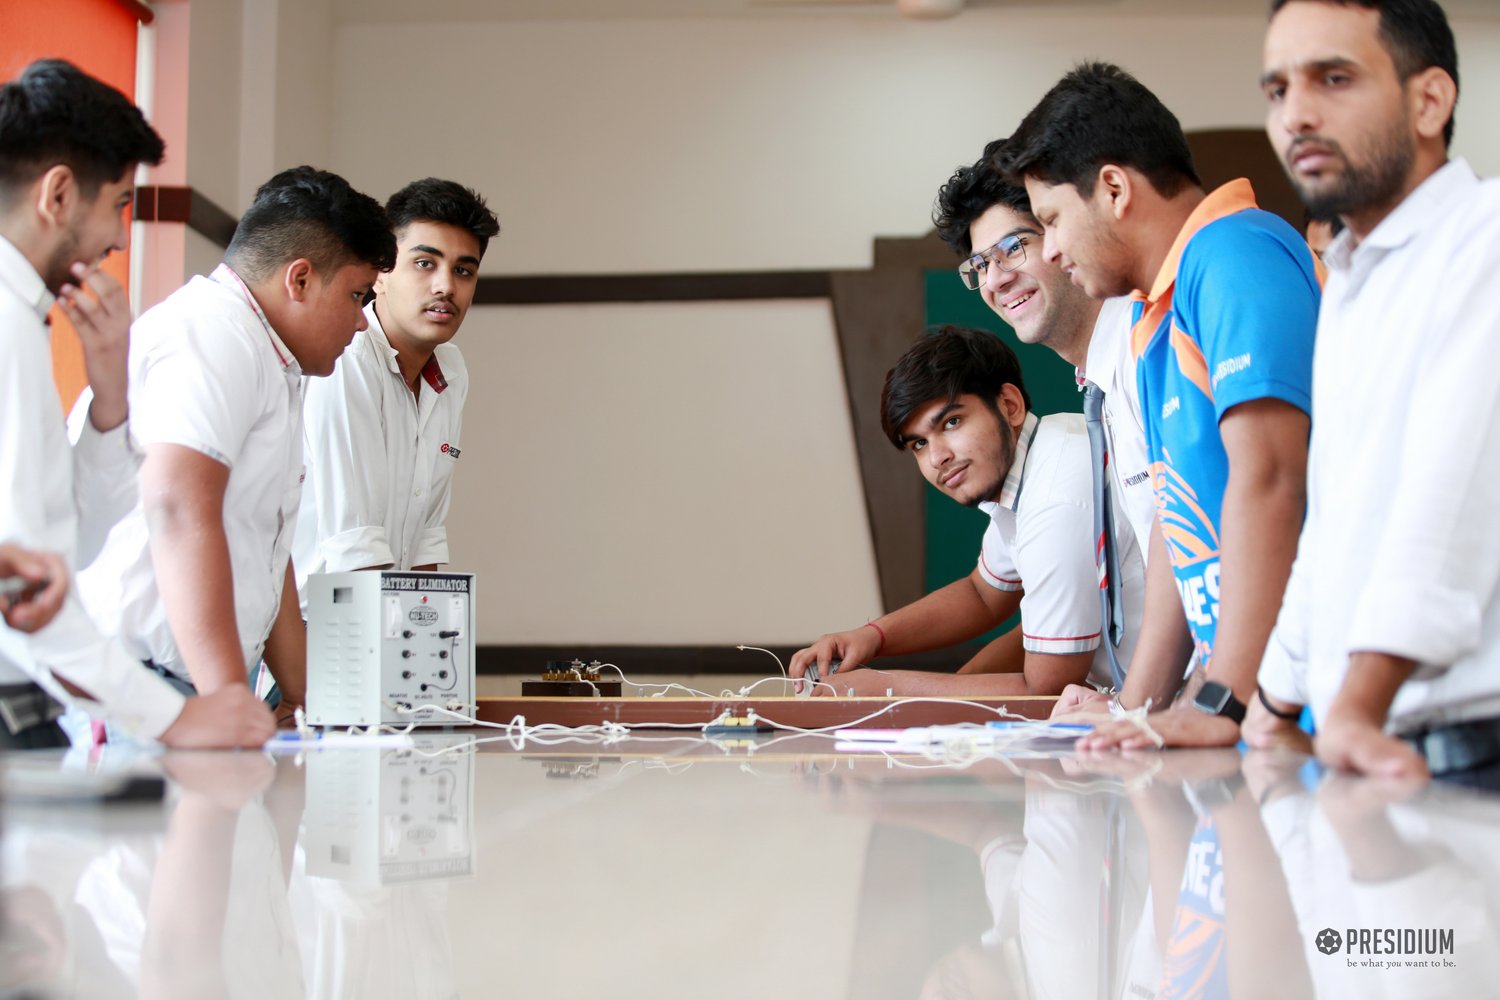 Presidium Rajnagar, STUDENTS LEARN HOW TO USE METER BRIDGE IN PHYSICS ACTIVITY